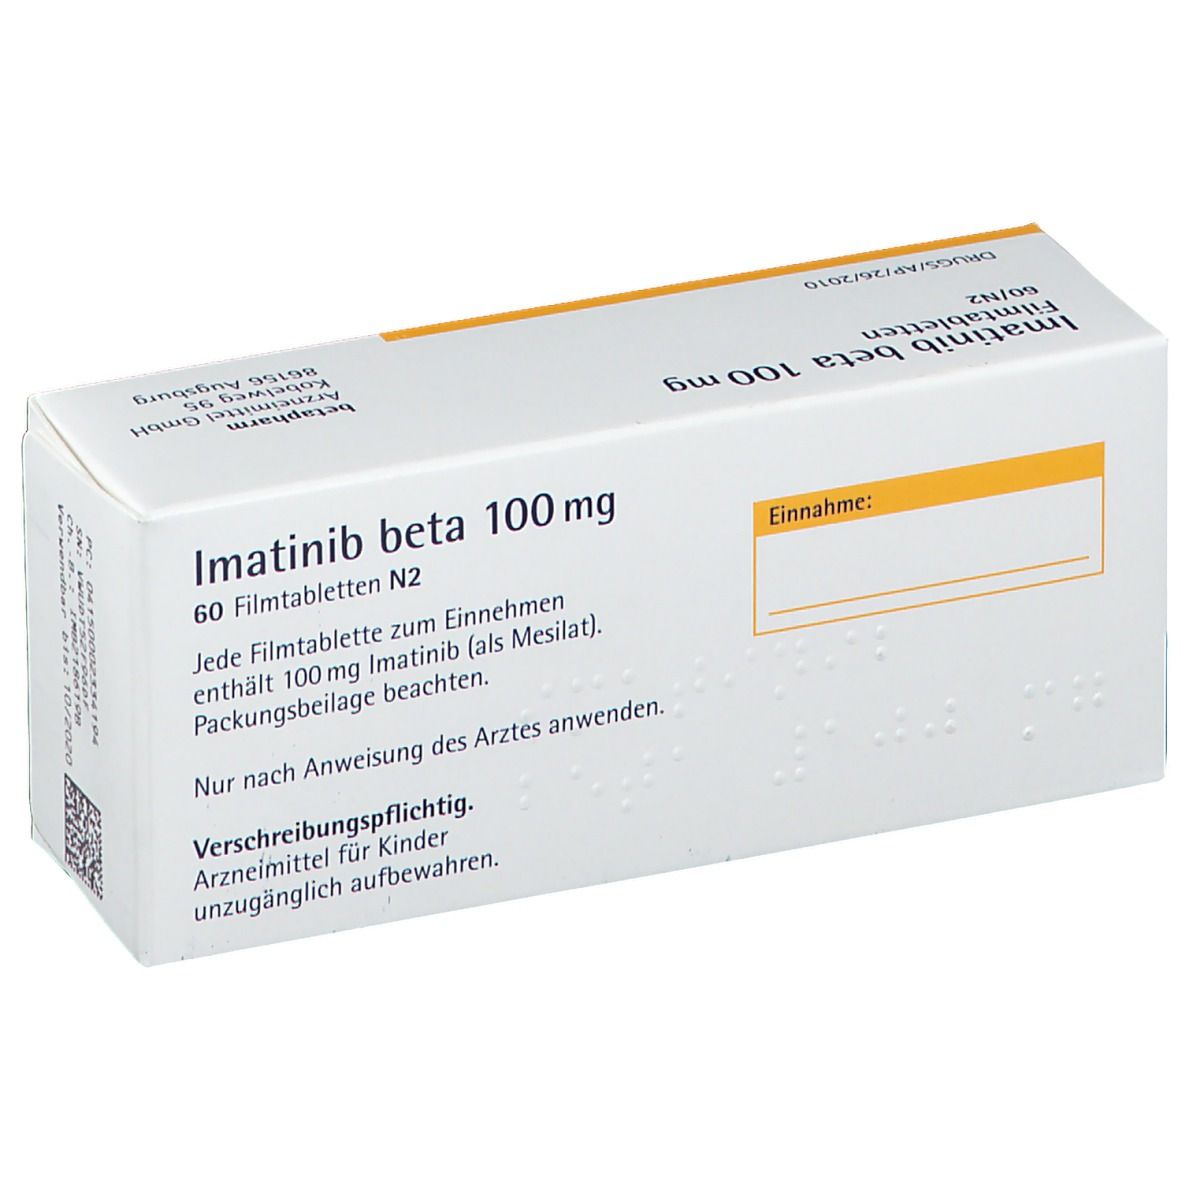 Imatinib beta 100 mg